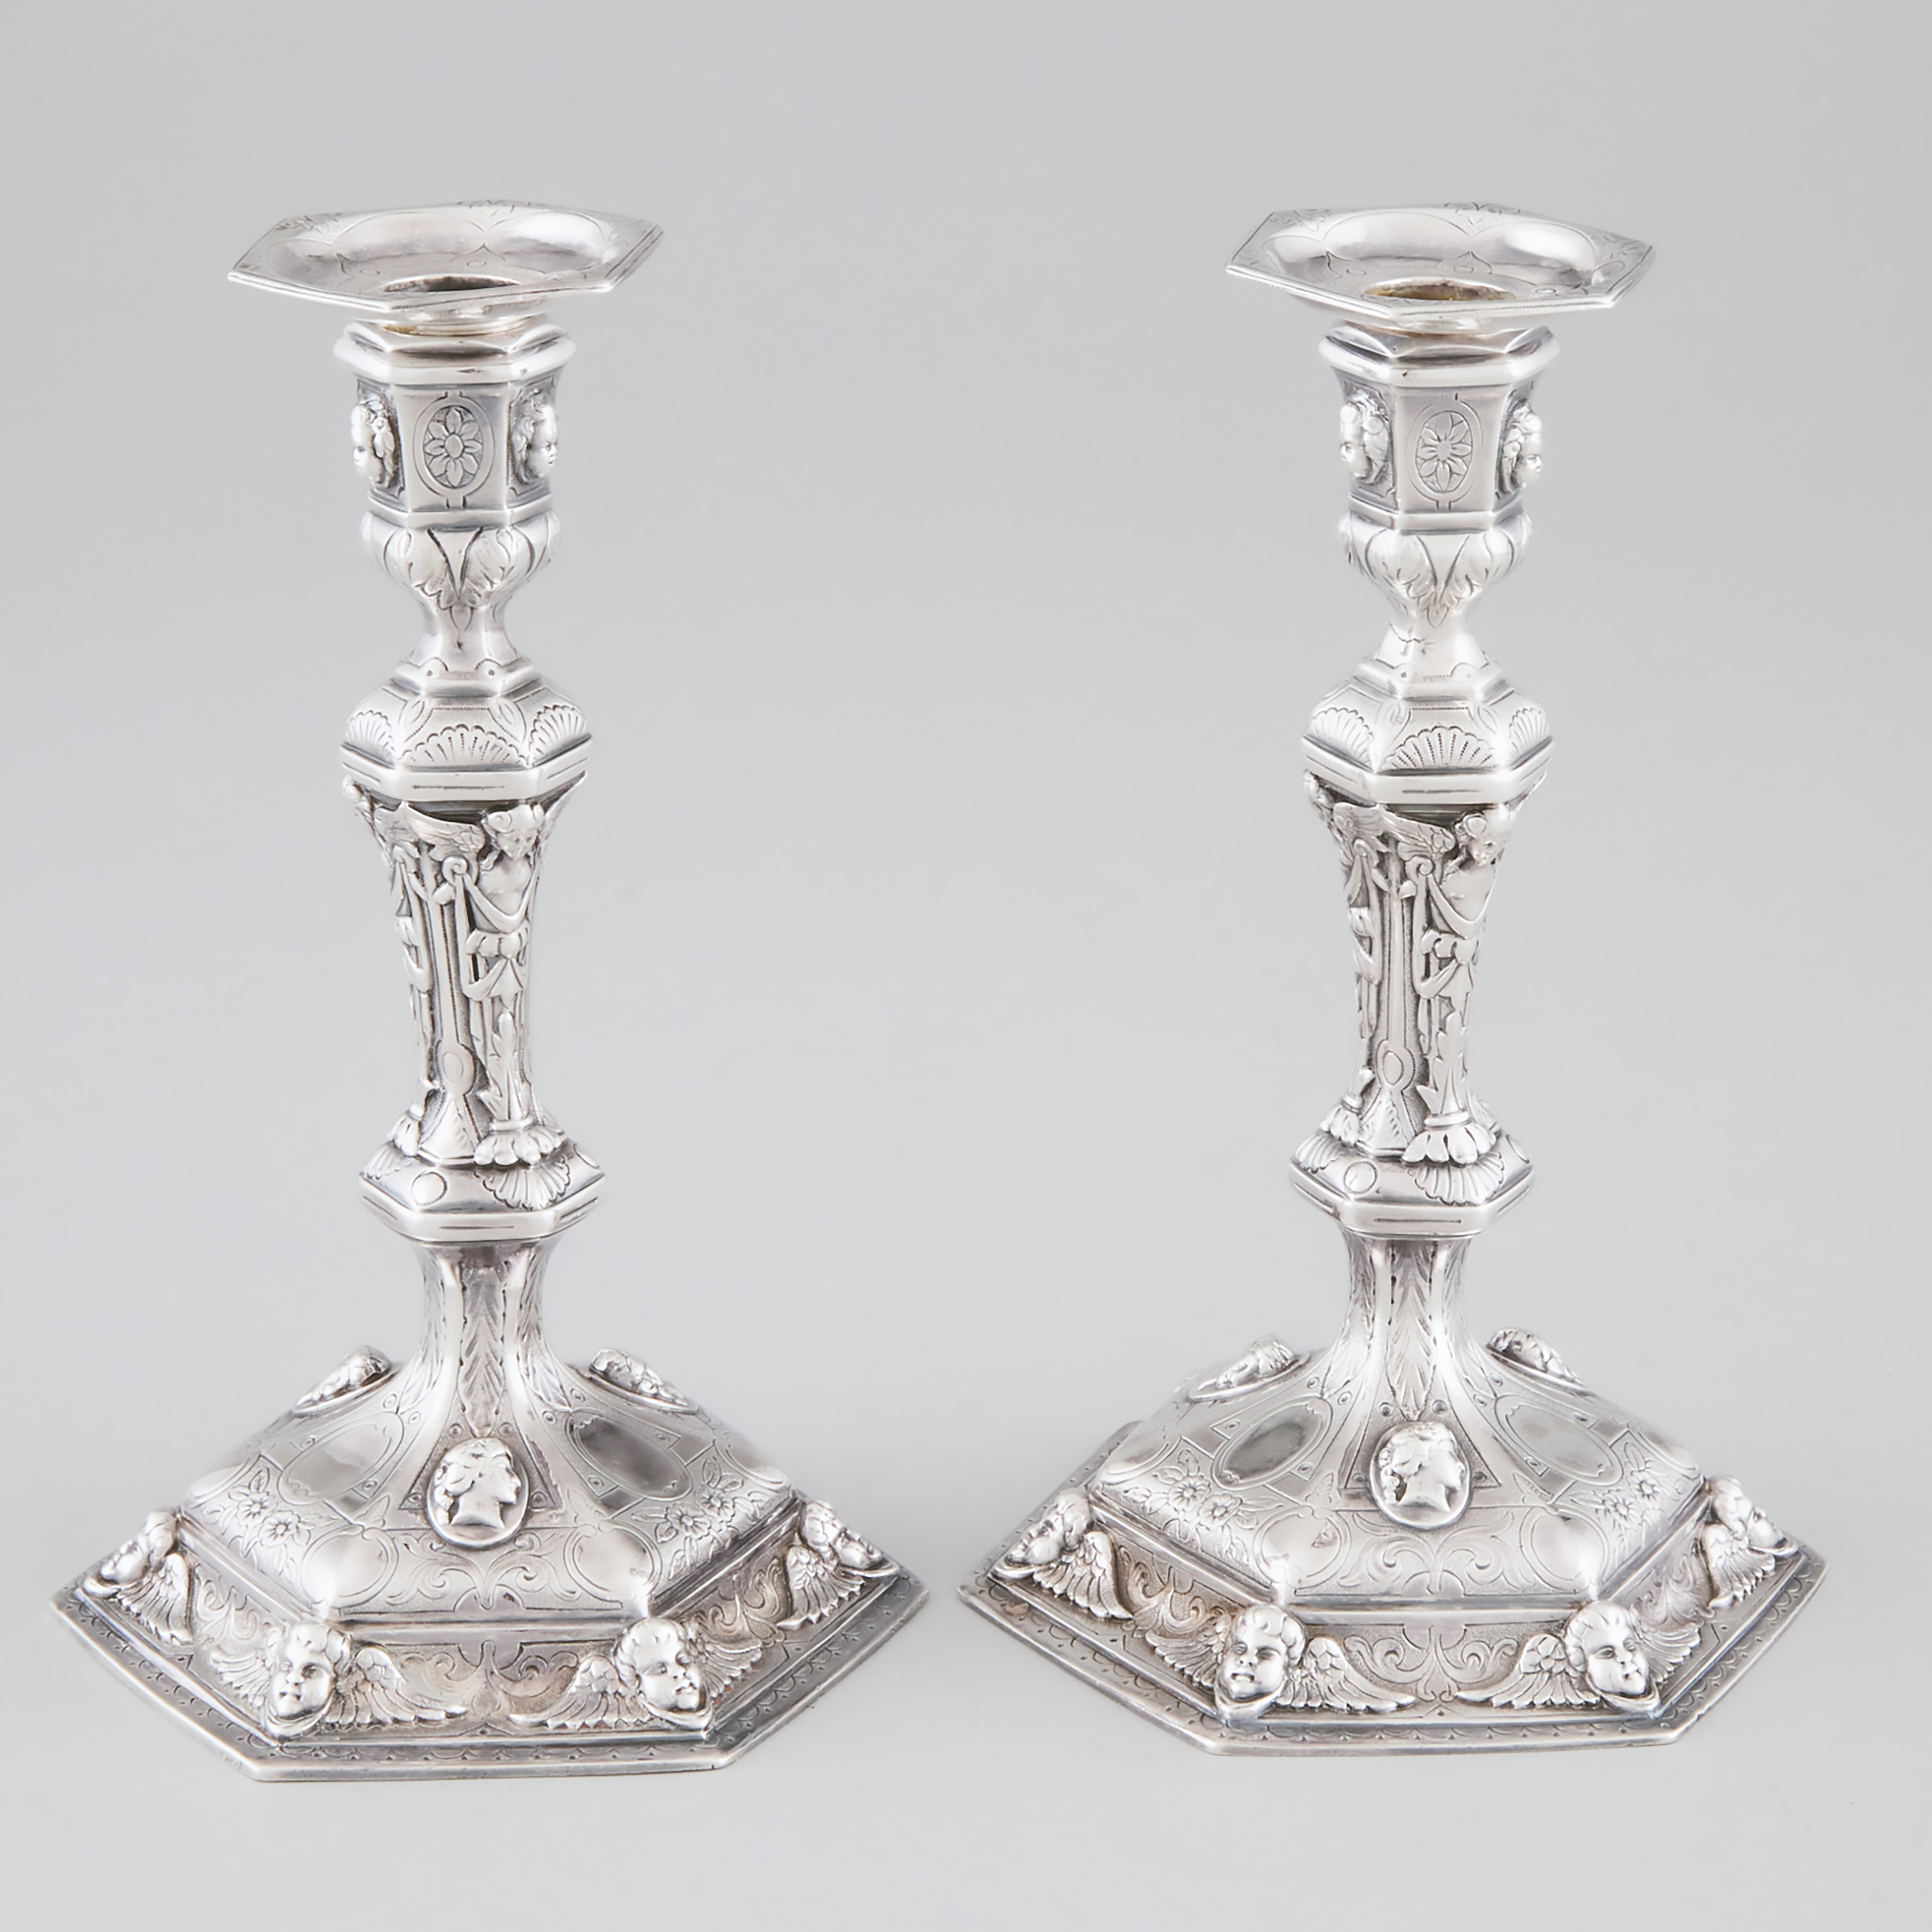 Pair of Edwardian Silver Renaissance Revival Table Candlesticks, Sebastian Garrard, London, 1908